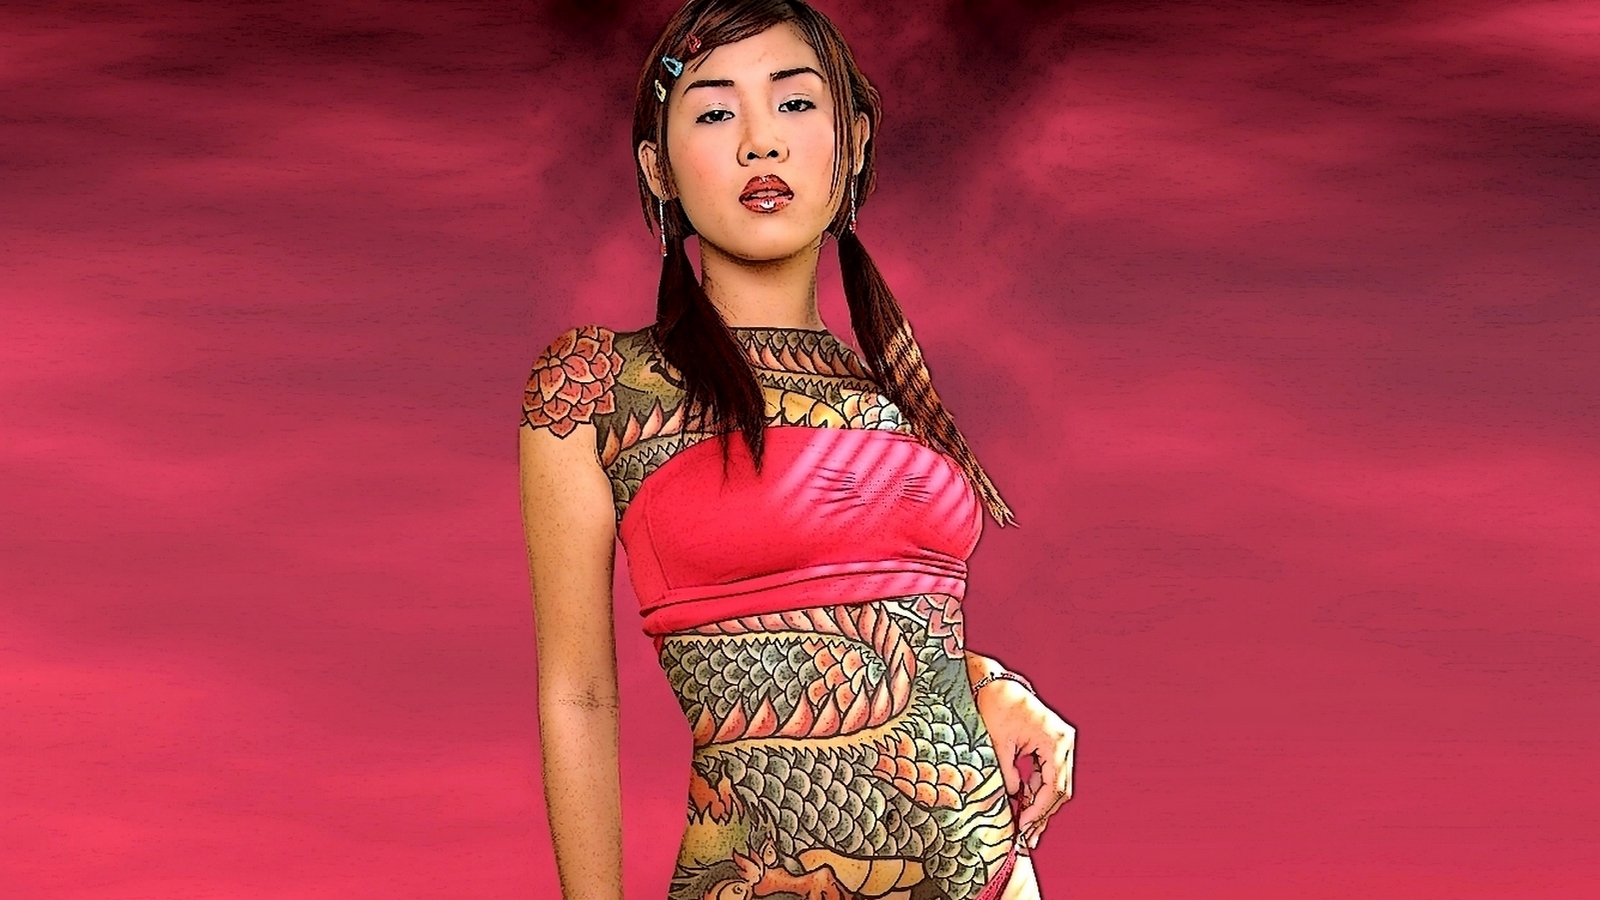 tattooed women wallpaper,abdomen,pink,trunk,photo shoot,fashion model